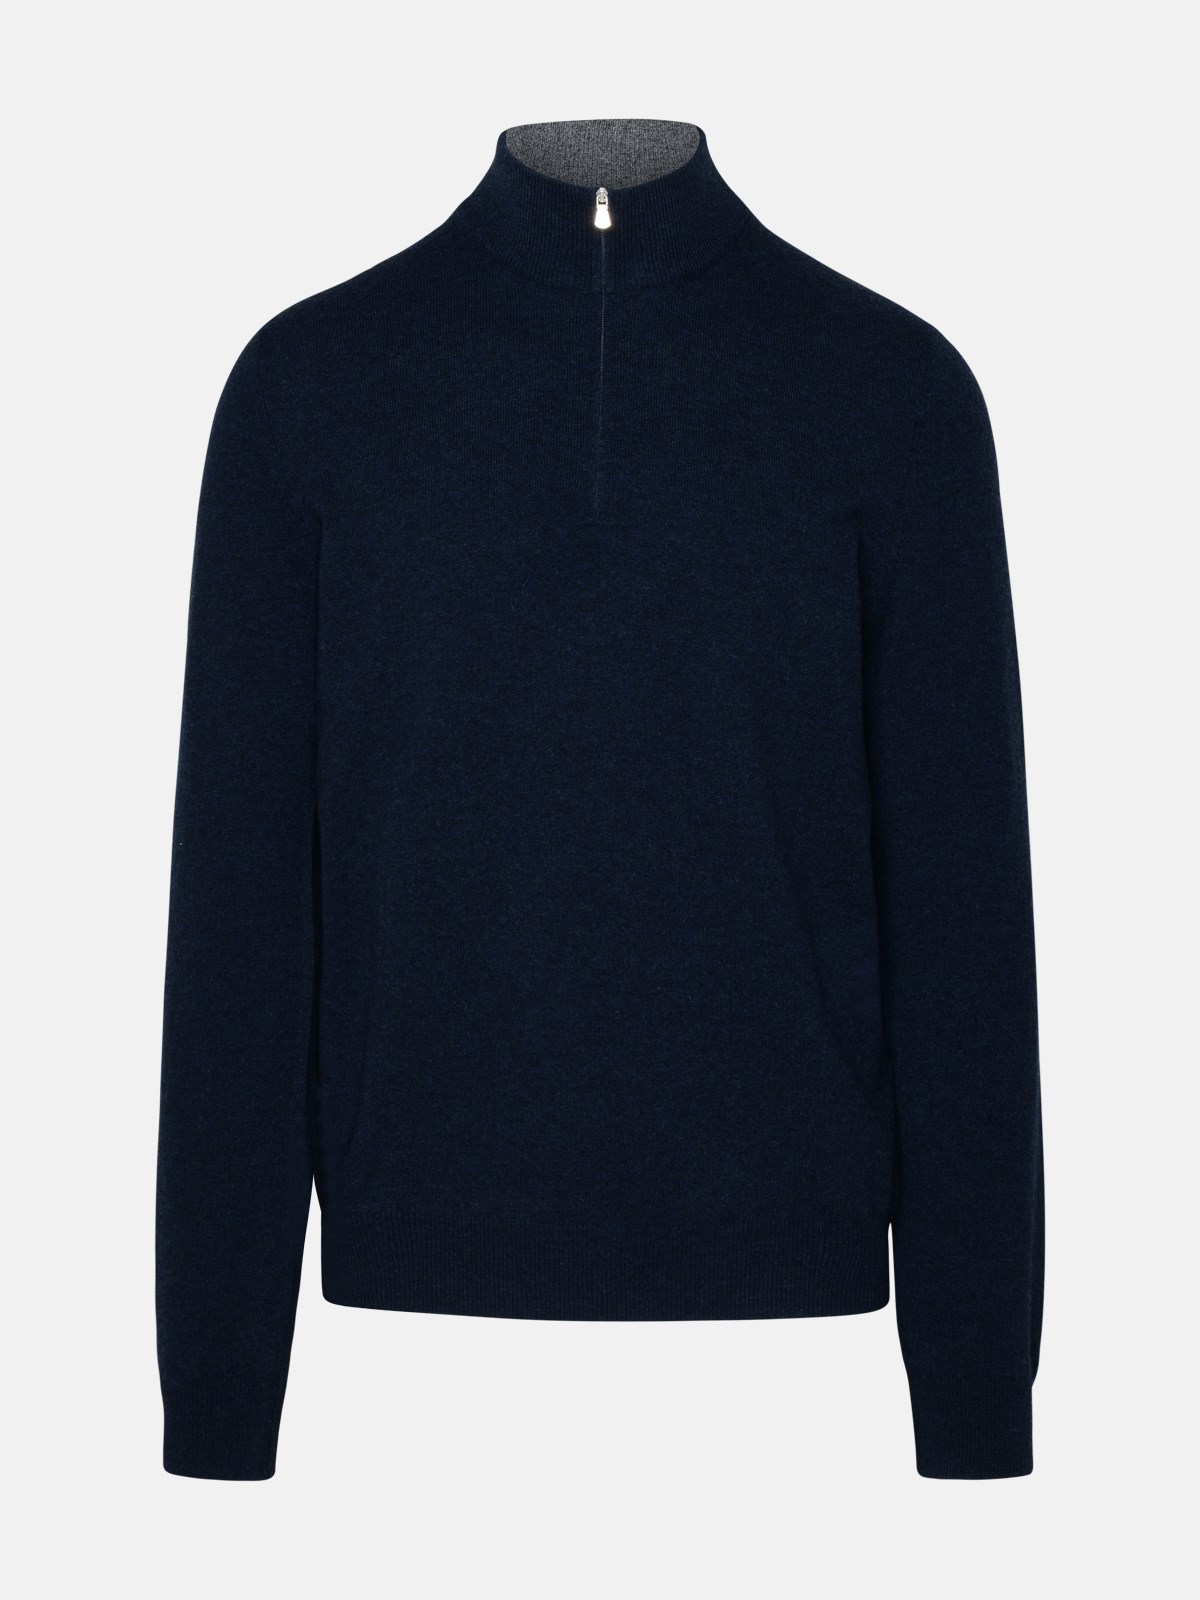 Gran Sasso Blue Cashmere Turtleneck Sweater